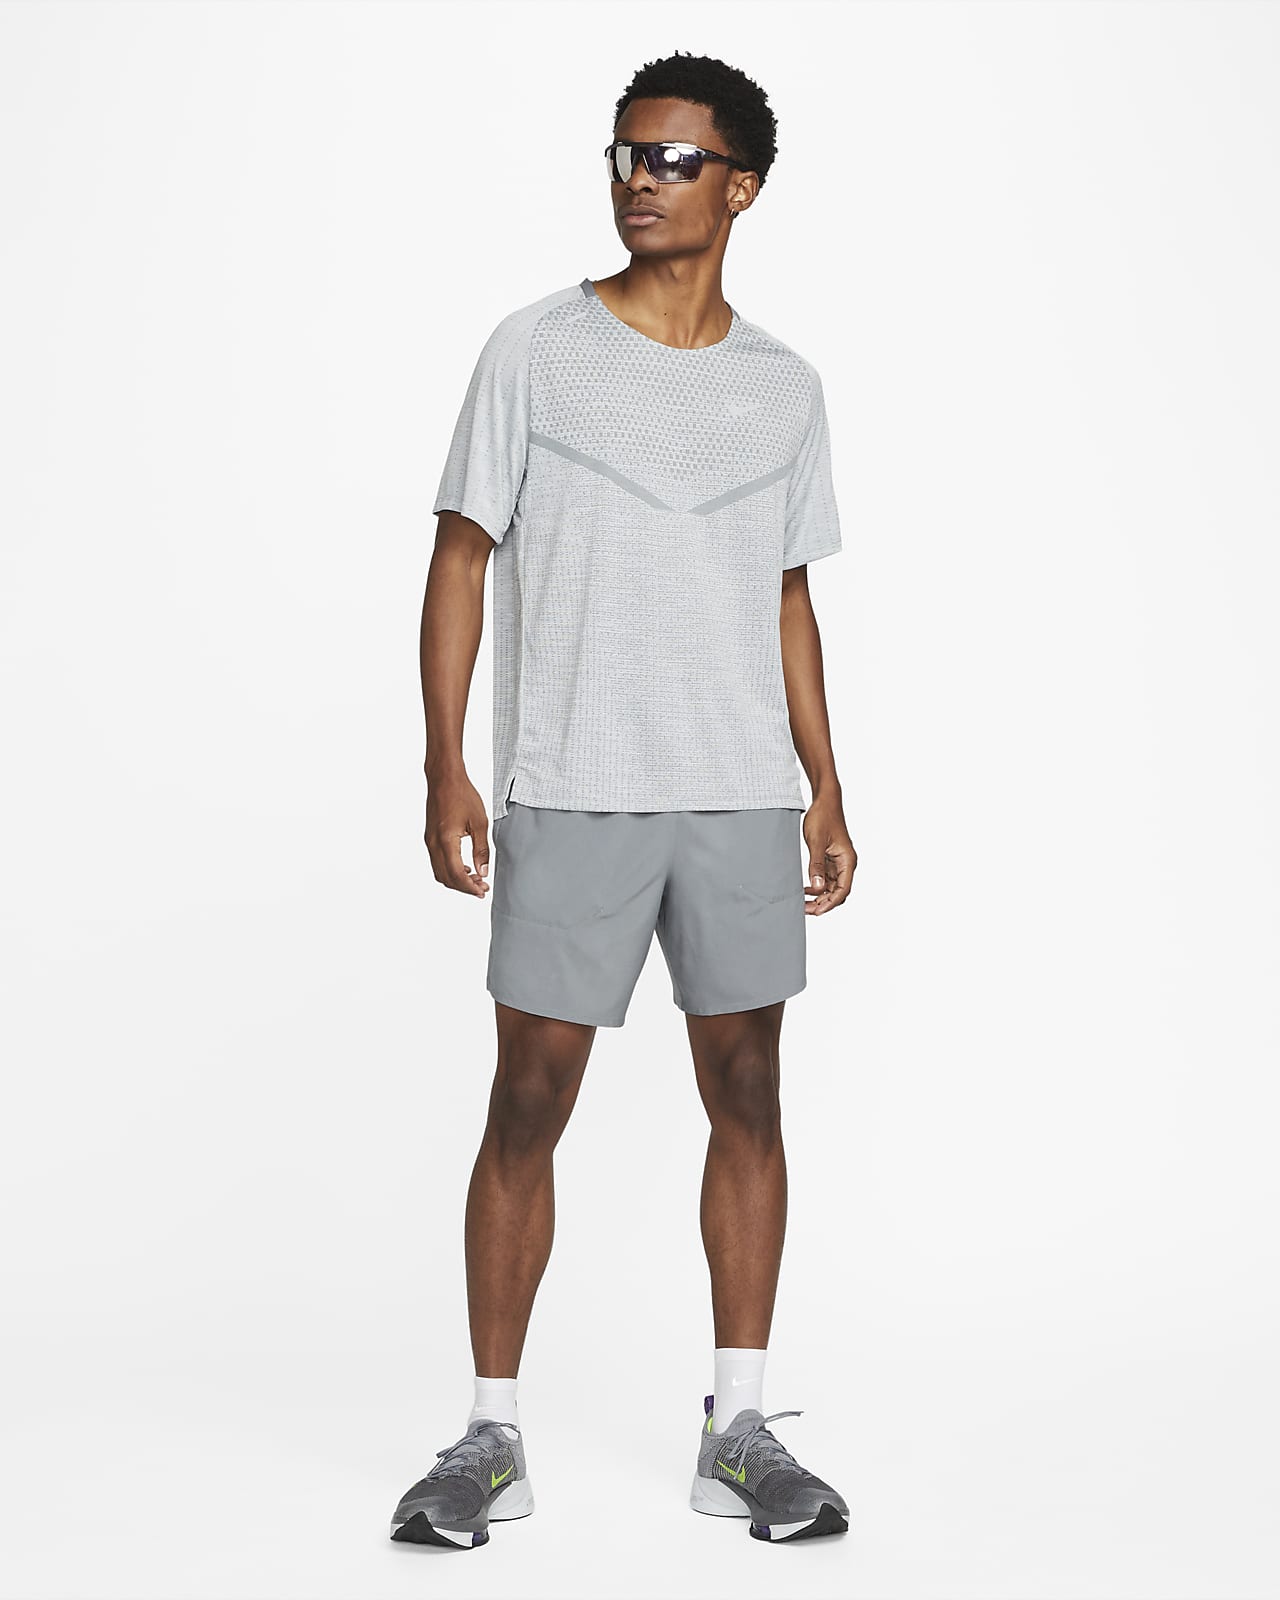 Nike TechKnit Men's Dri-FIT ADV Short-Sleeve Running Top. 